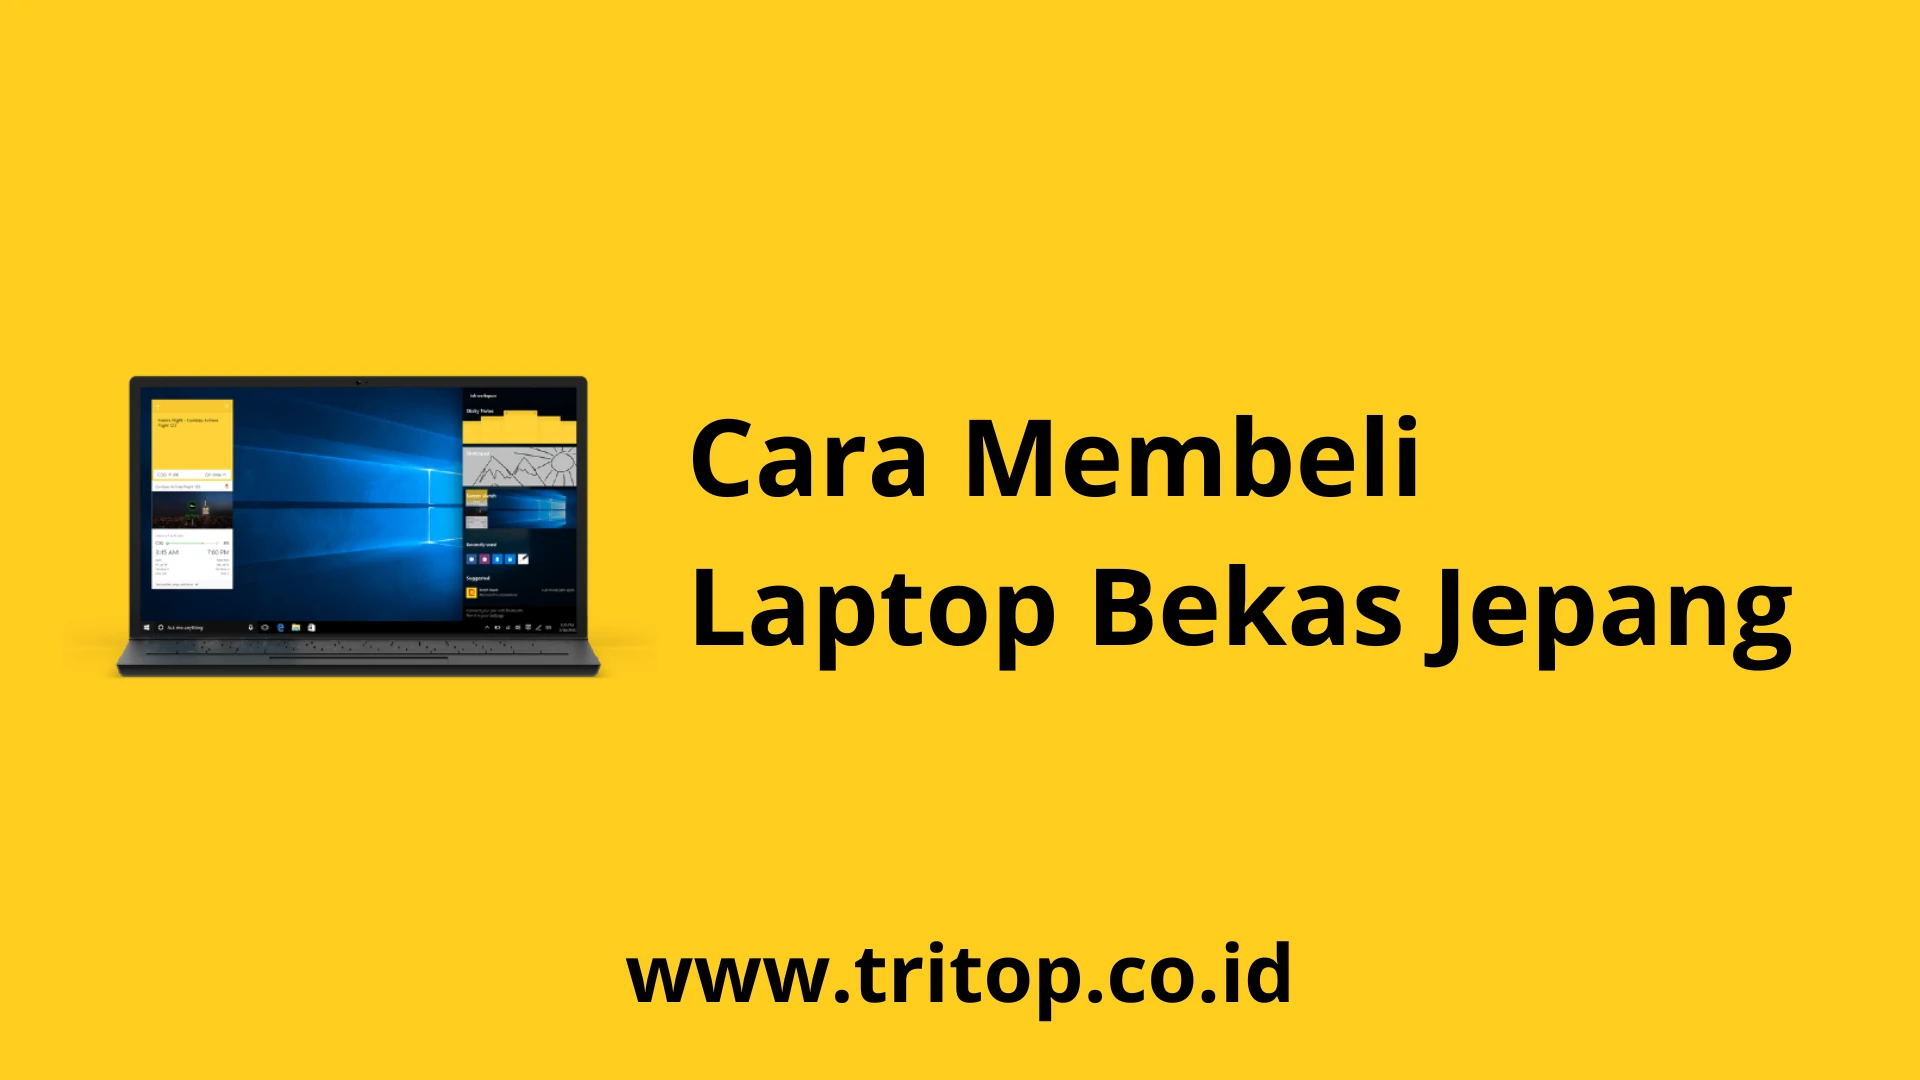 Laptop Bekas Jepang Tritop.co.id